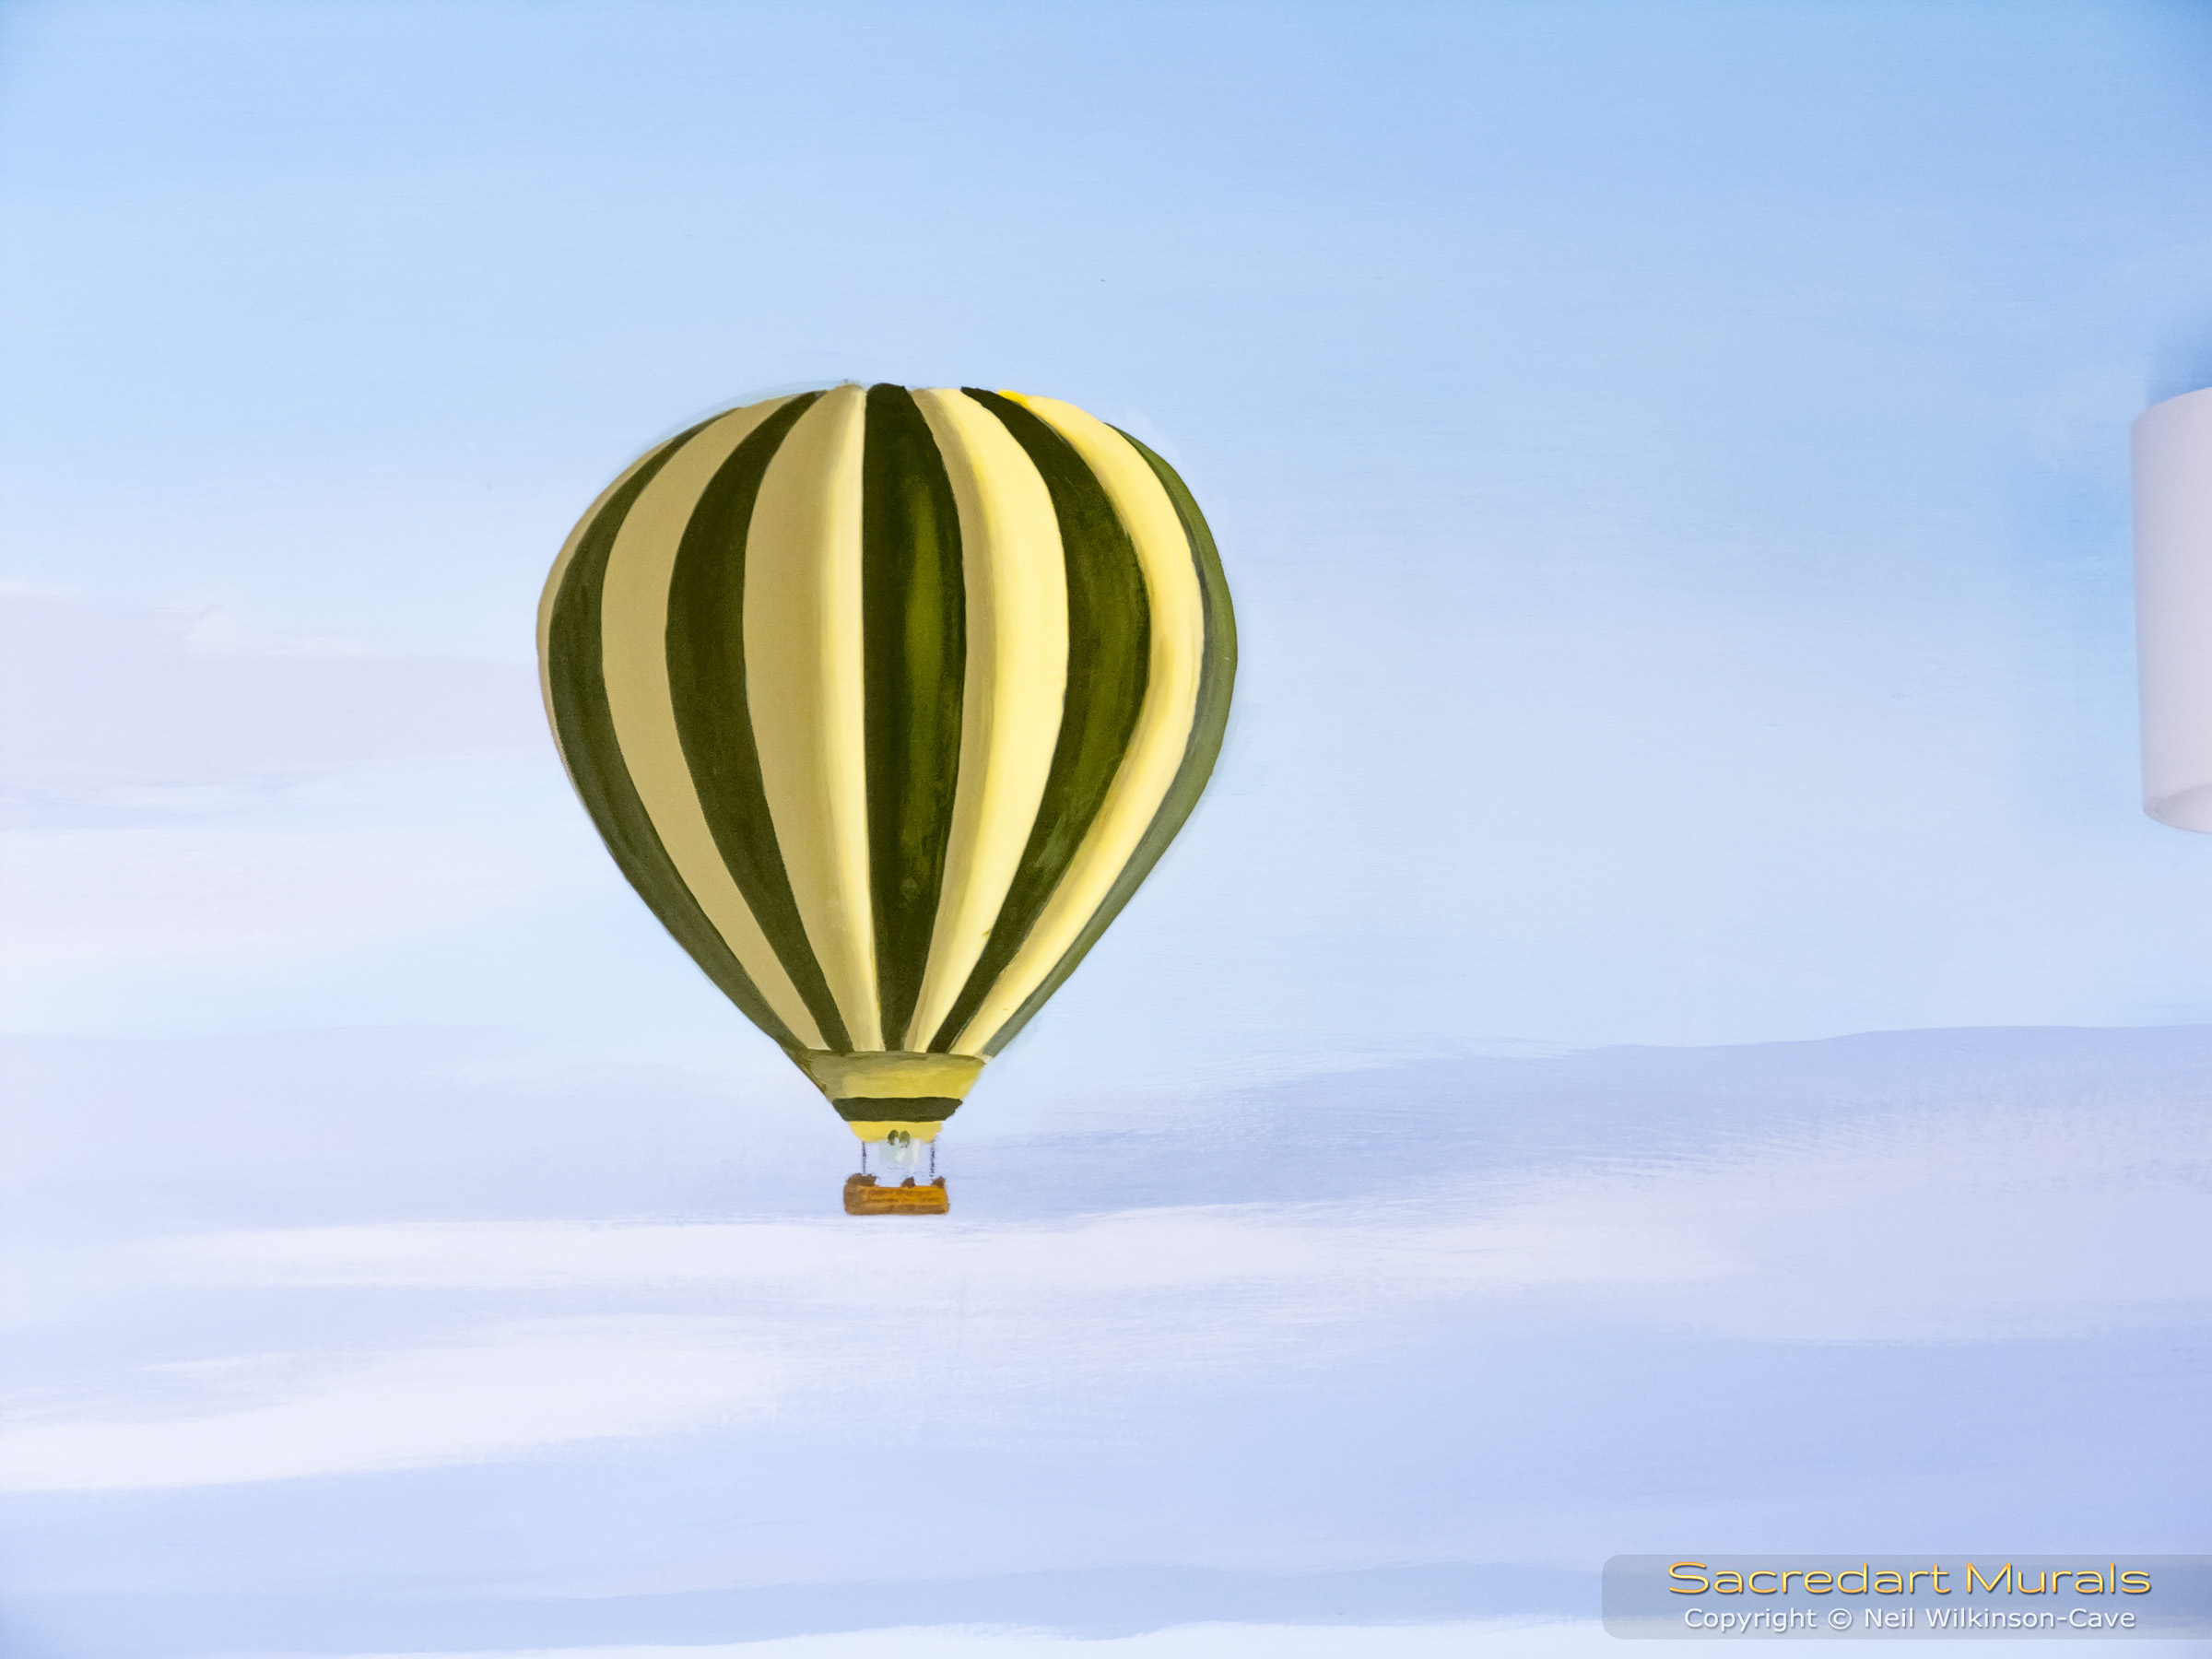 African safari mural hot air balloon